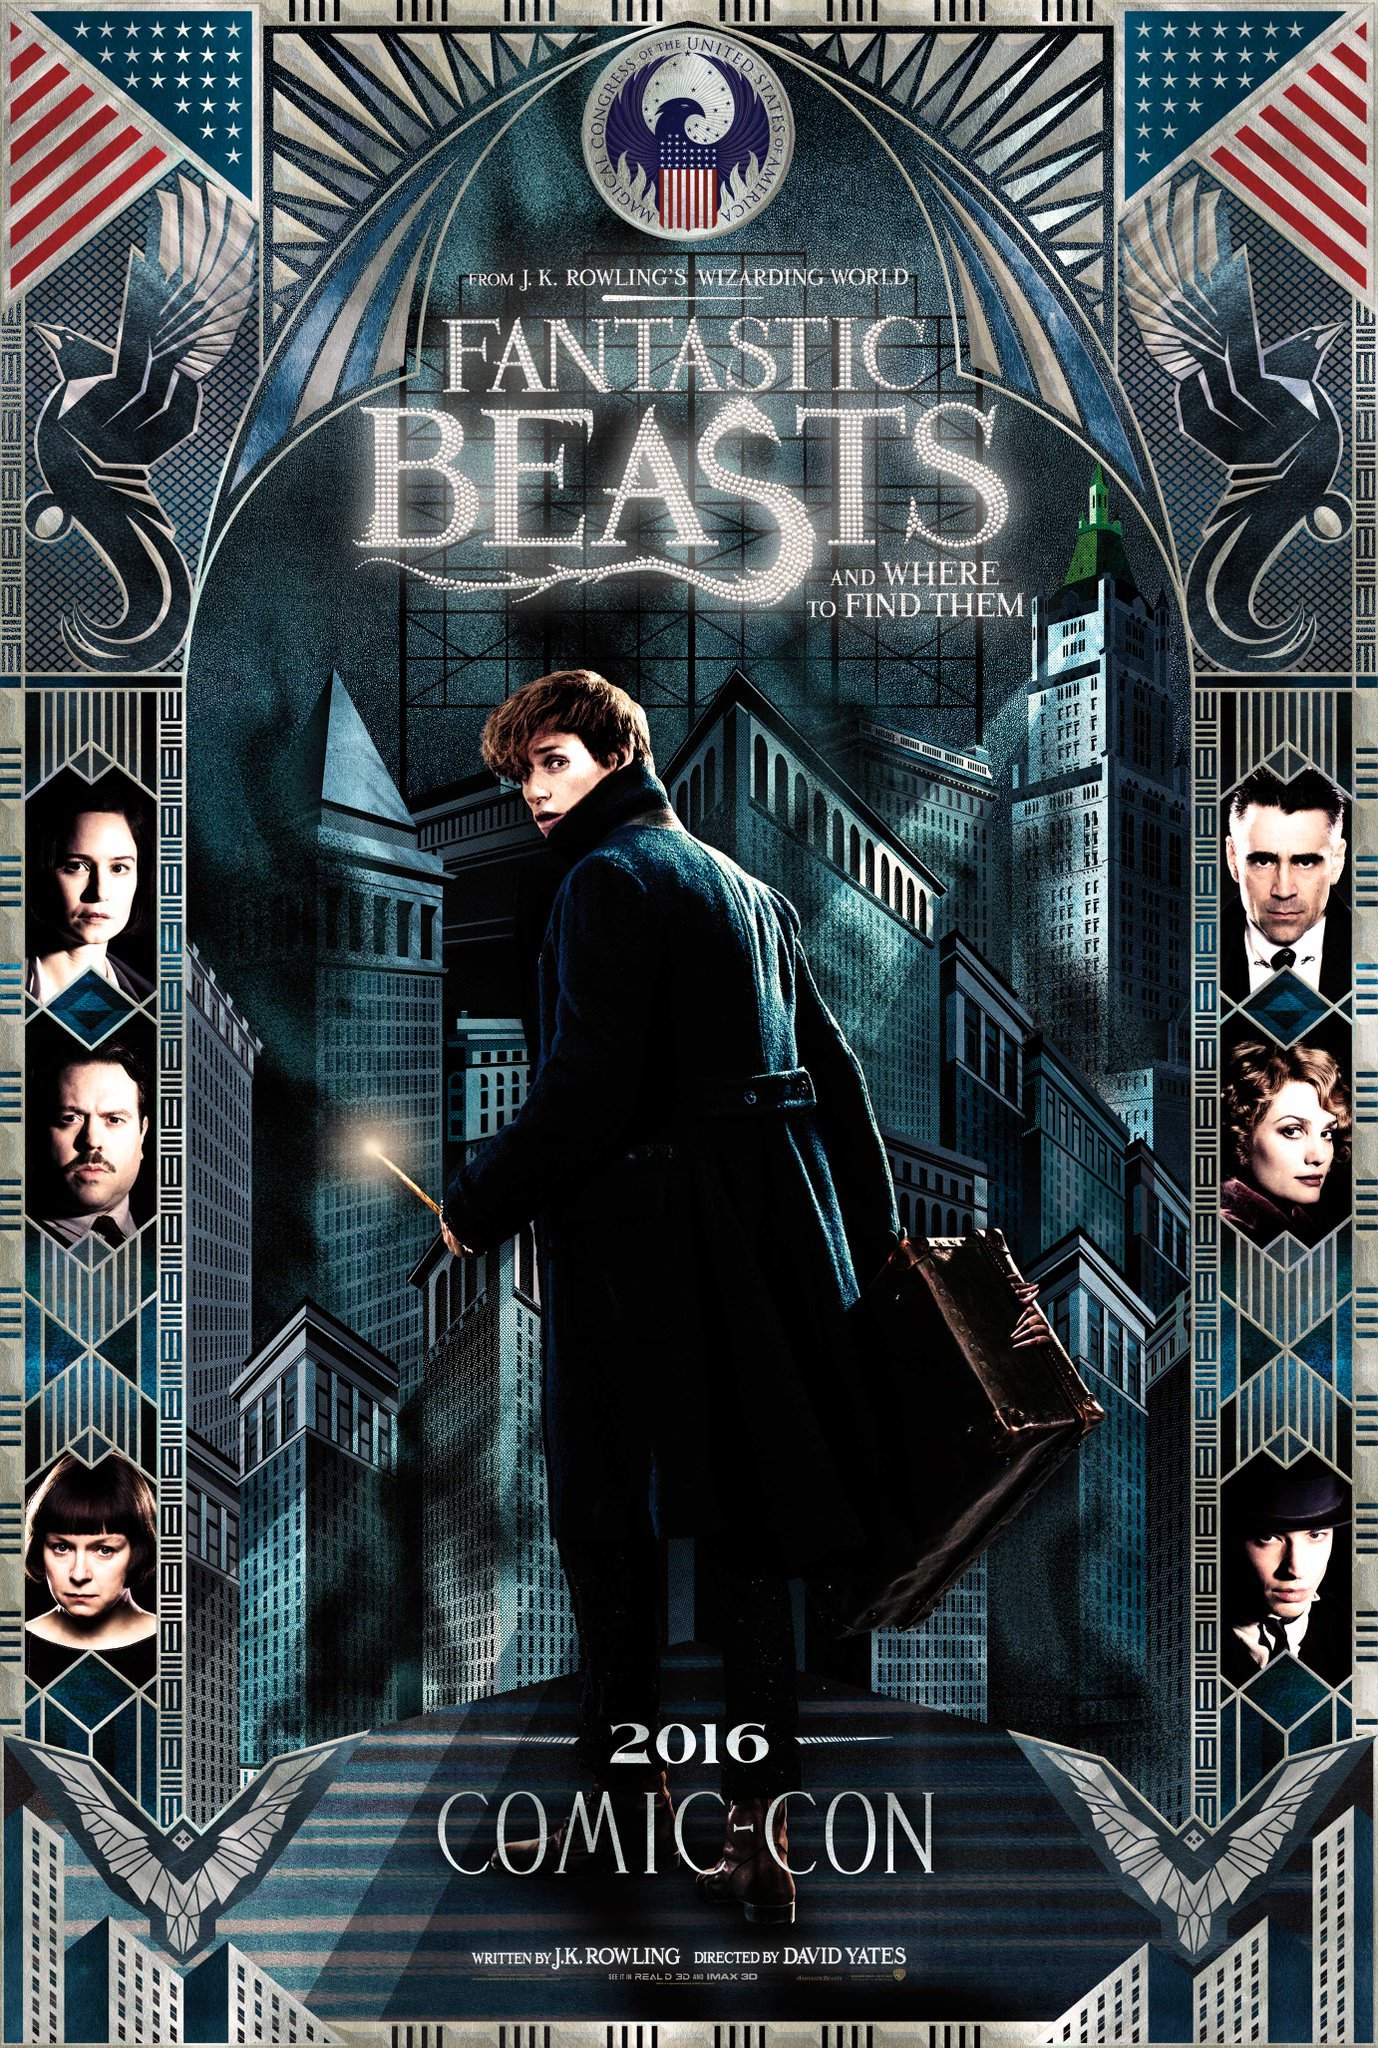 fantastical beasts release date